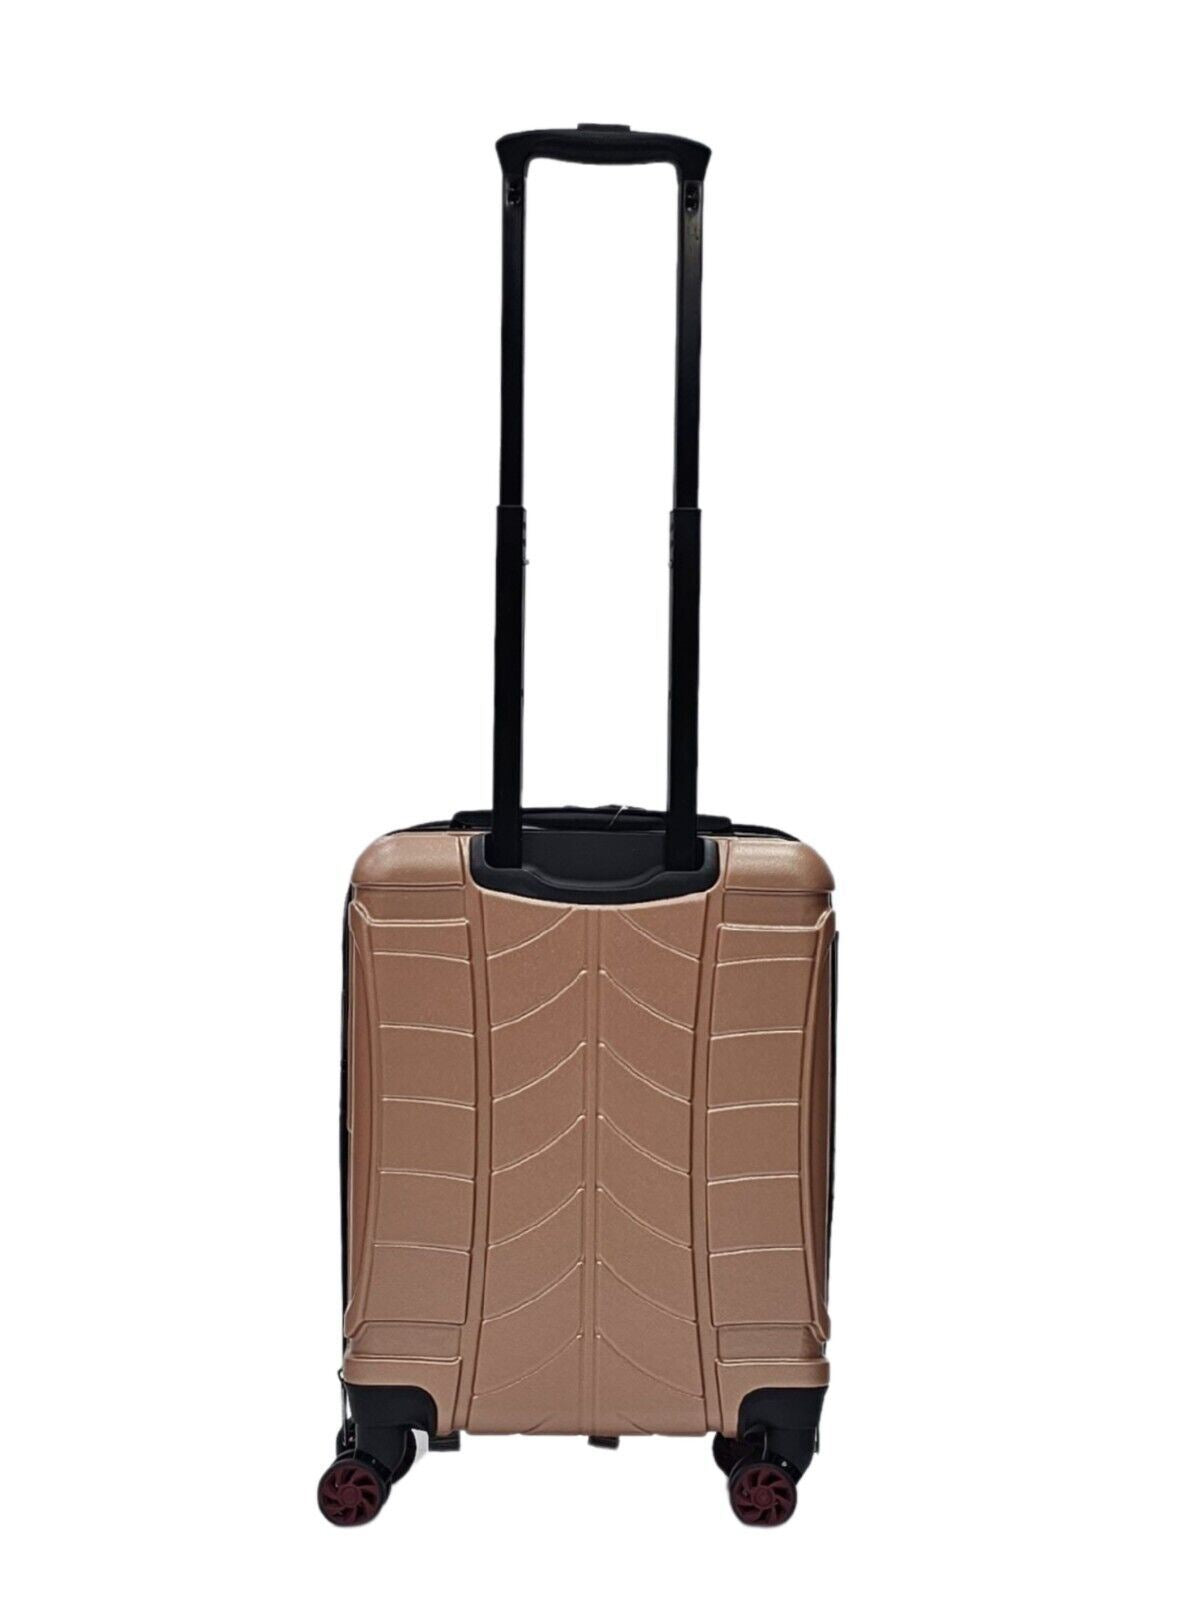 Hard Shell Cabin Suitcase 4 Wheel Luggage Travel Bag